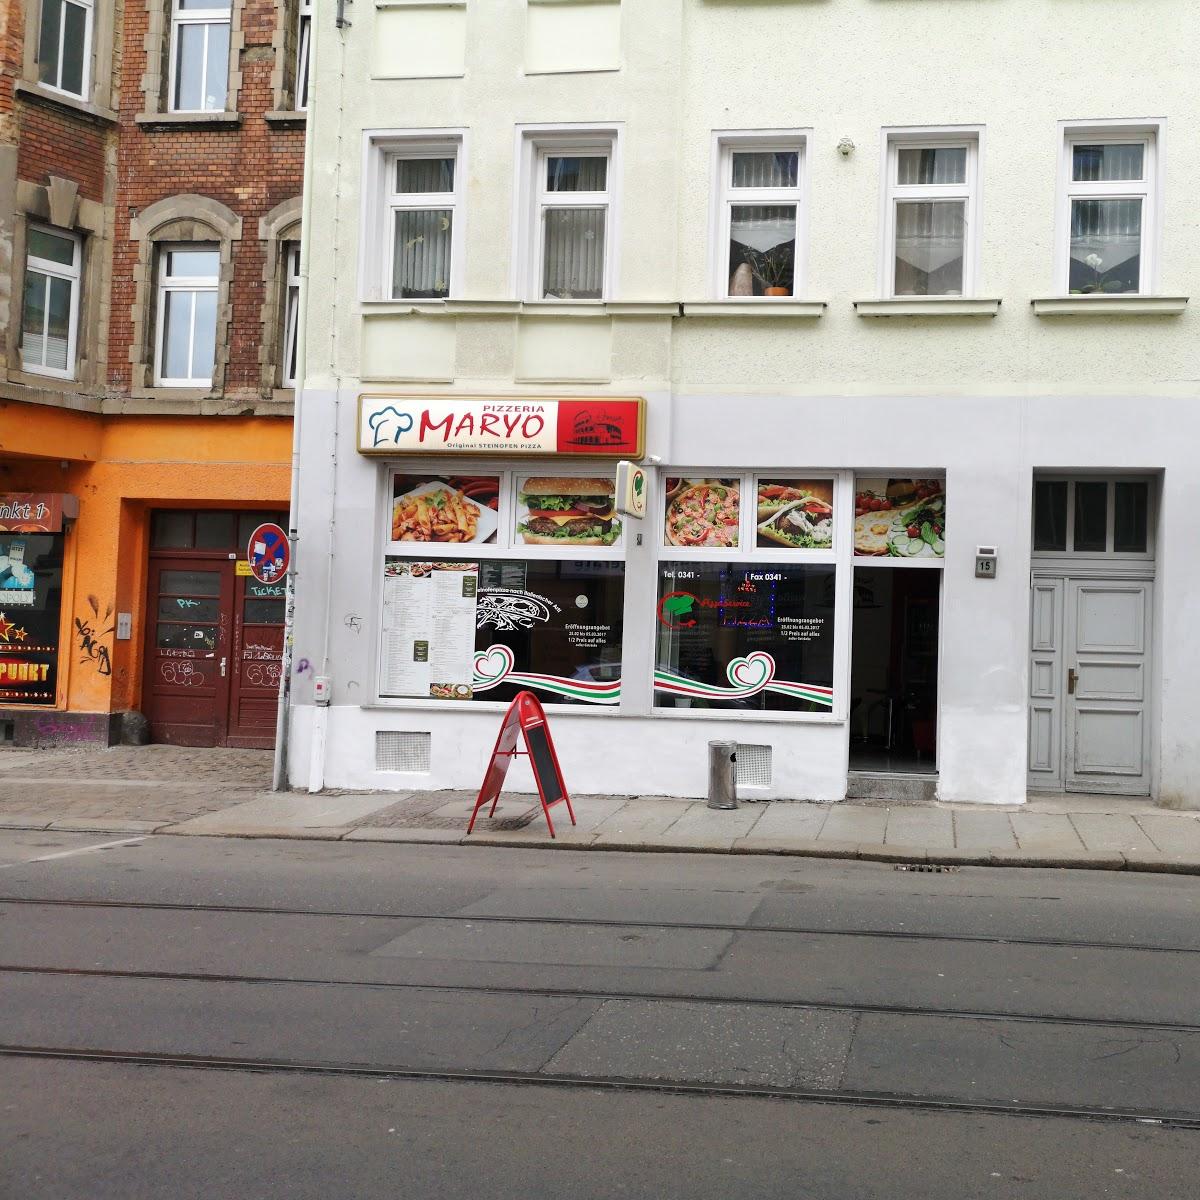 Restaurant "Pizzeria Maryo" in Leipzig